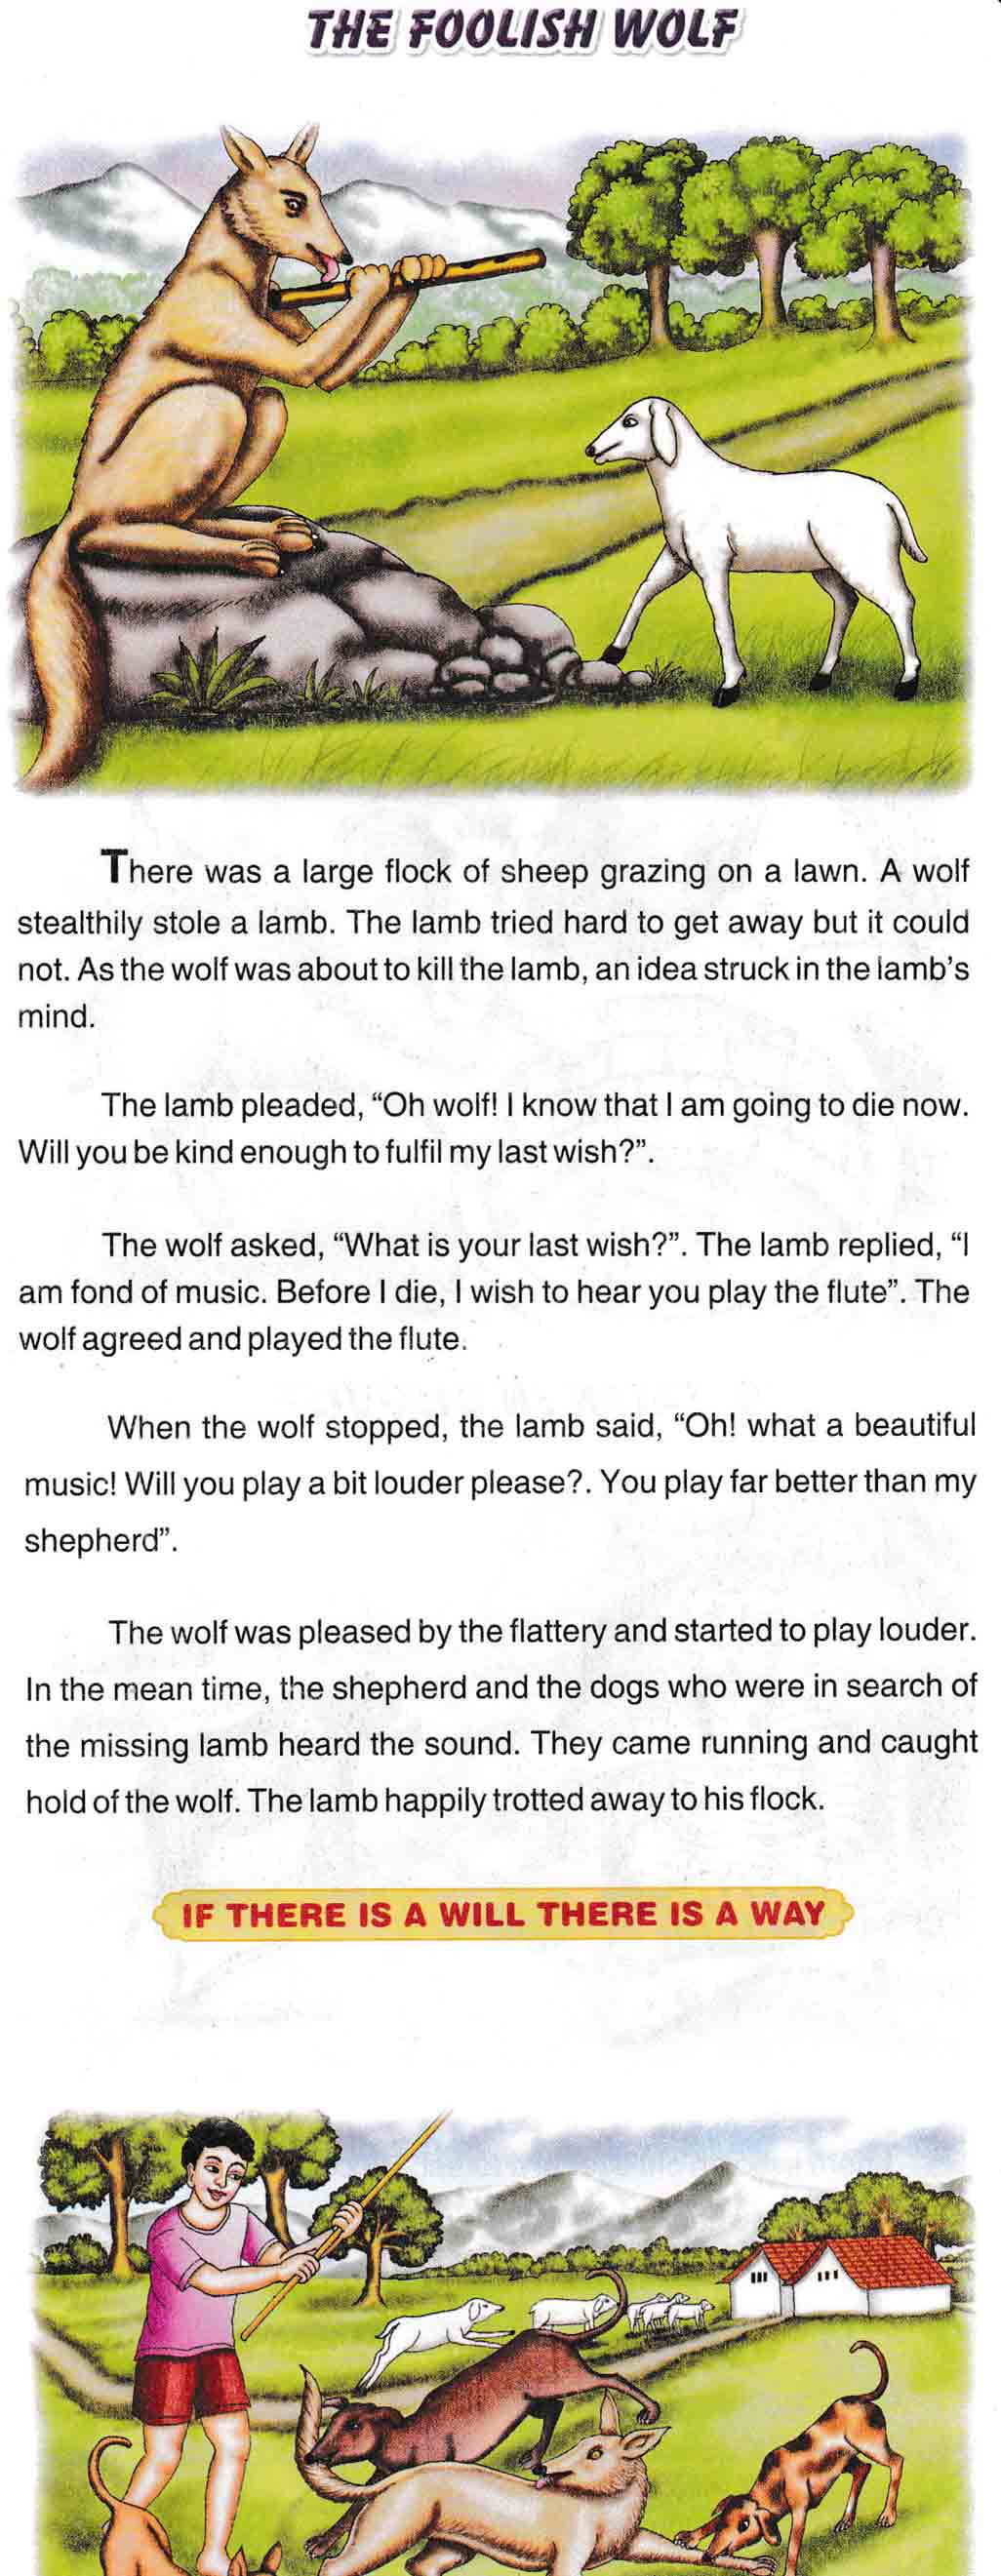 "The Foolish Wolf kids Short Story"